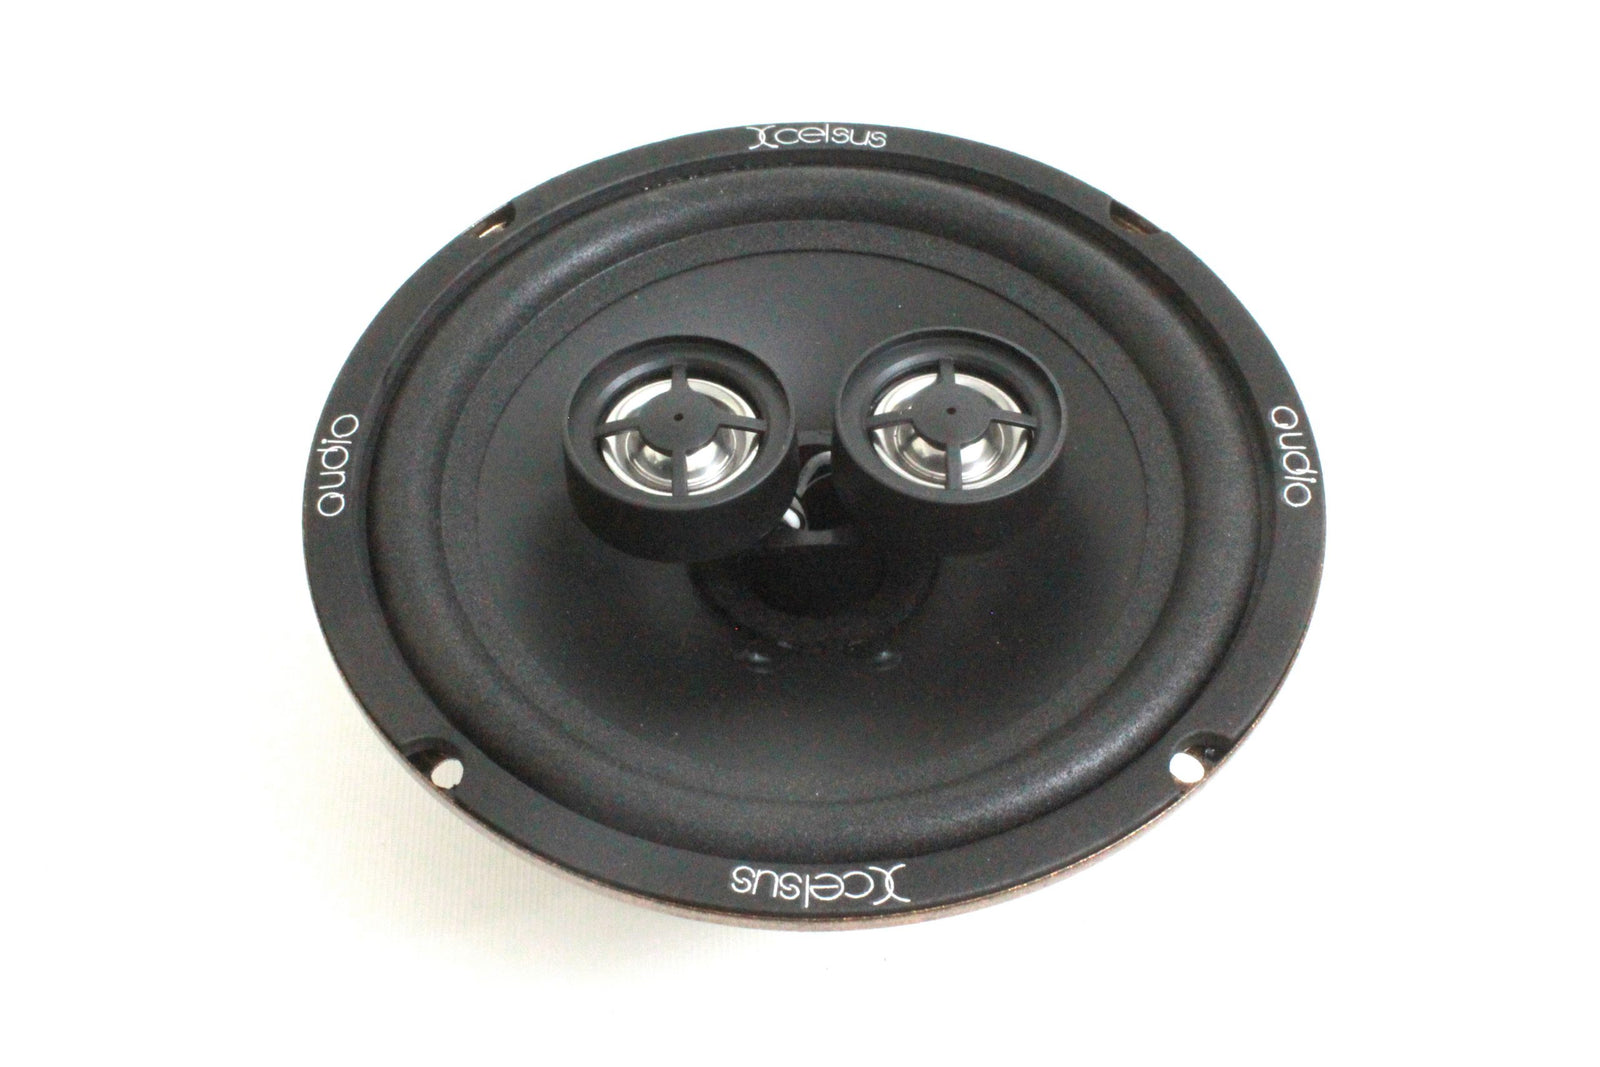 Xcelsus Audio XP620 Coaxial 6.5" Car 2-Way Premium Series Speaker System